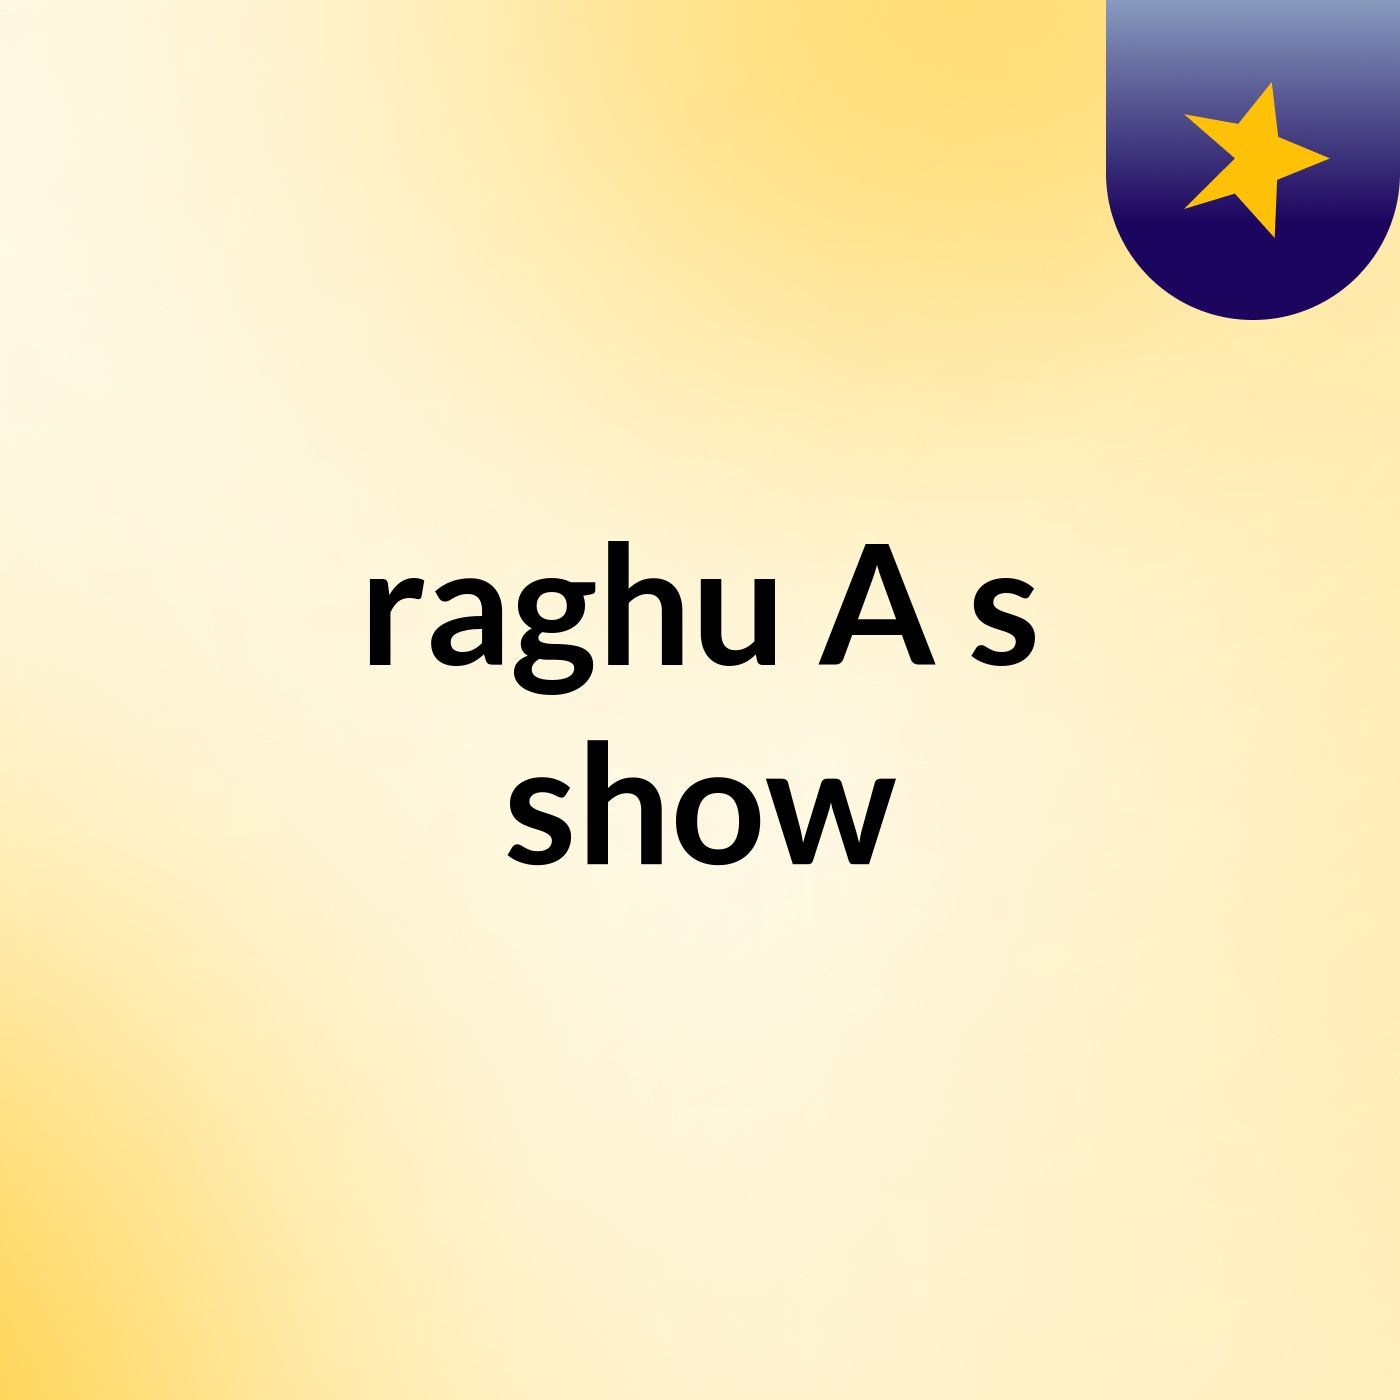 raghu A's show